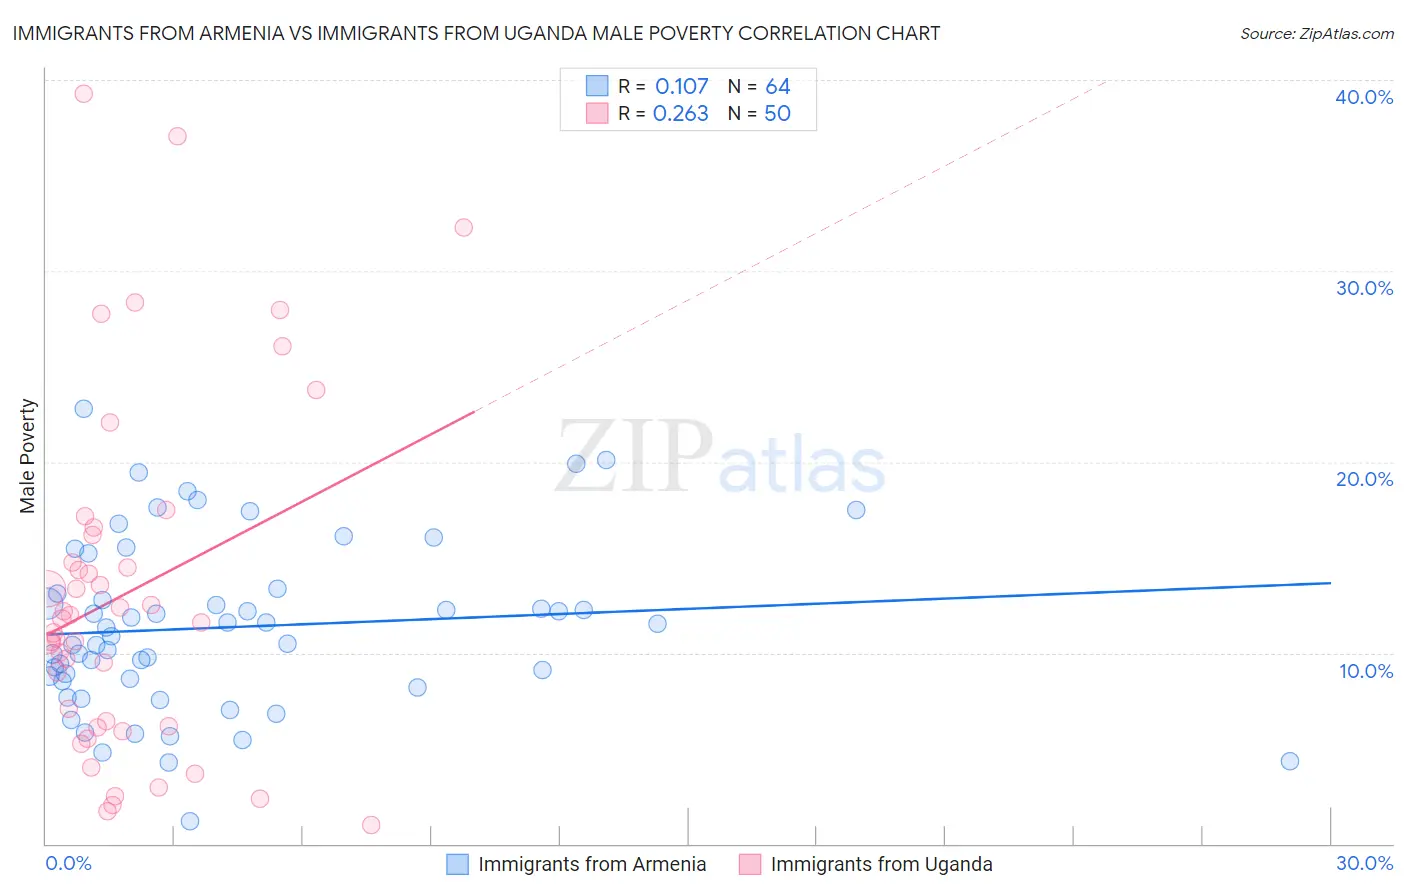 Immigrants from Armenia vs Immigrants from Uganda Male Poverty